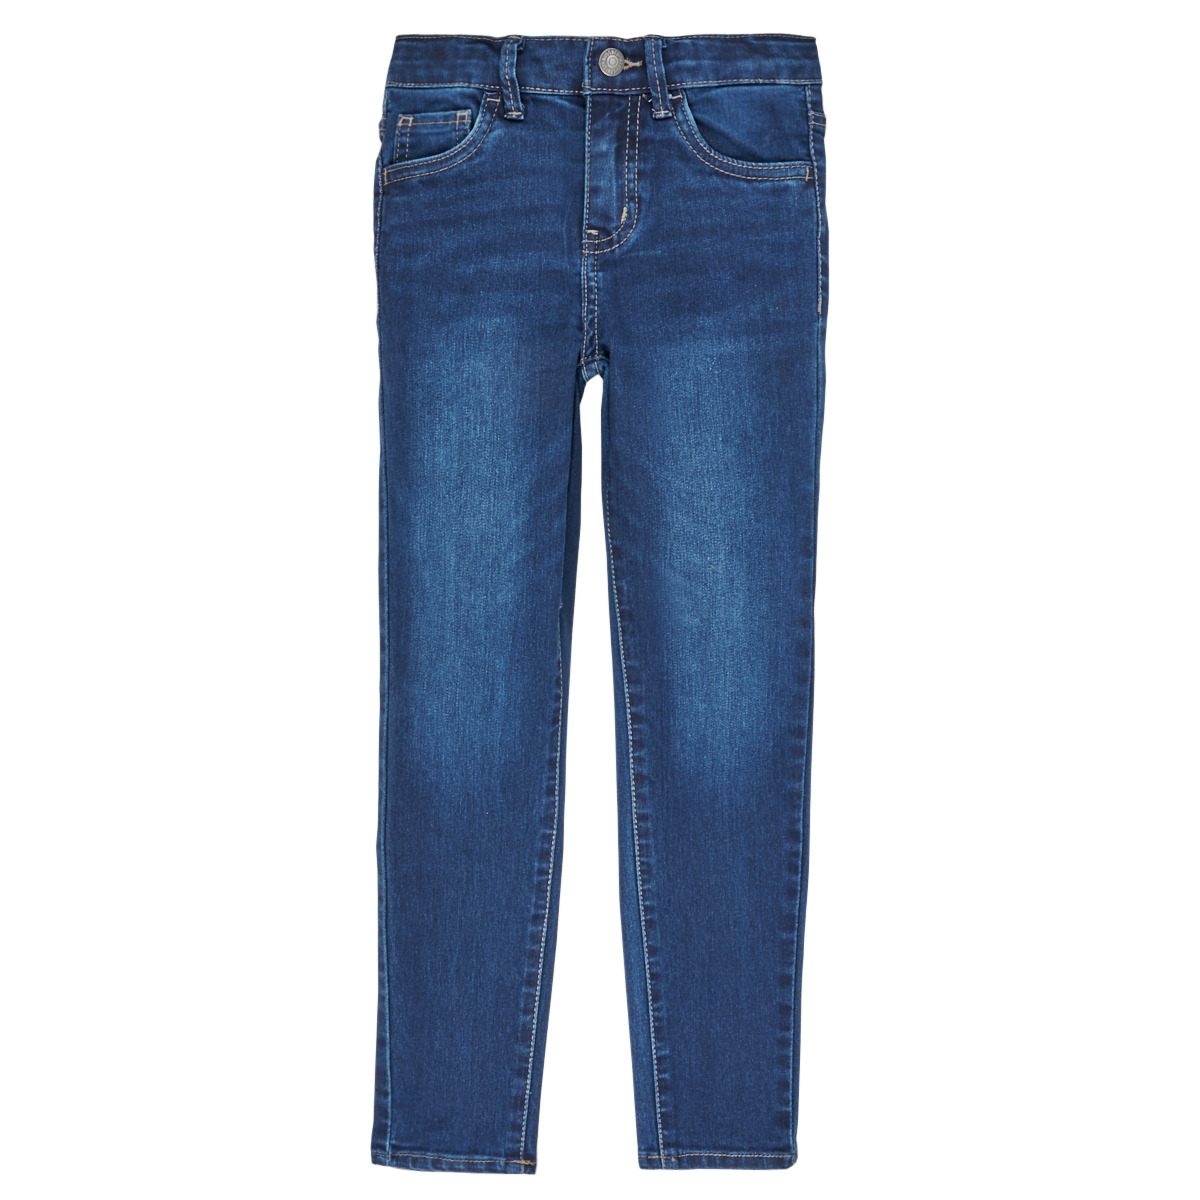 Super skinny jeans 710 LEVI'S jeansblauw